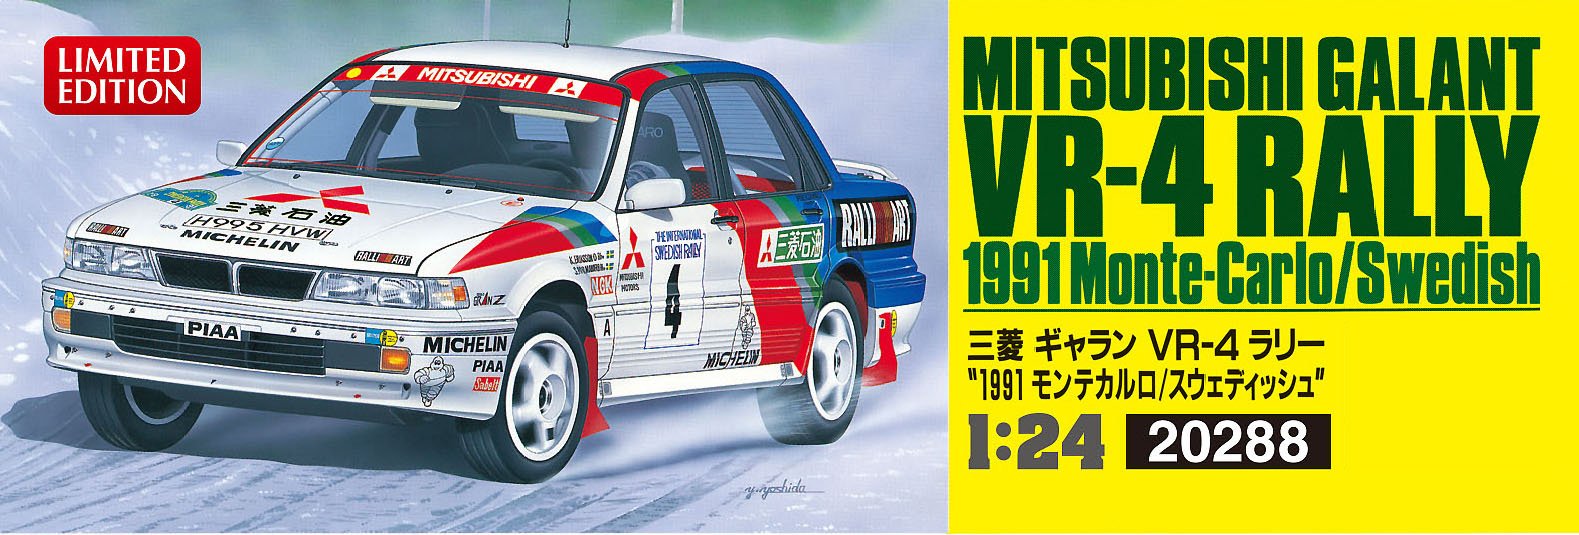 Hasegawa 20288 Mitsubishi Galant VR-4 Rallye 1991 Monte-Carlo/Schwedisch, Maßstab 1/24